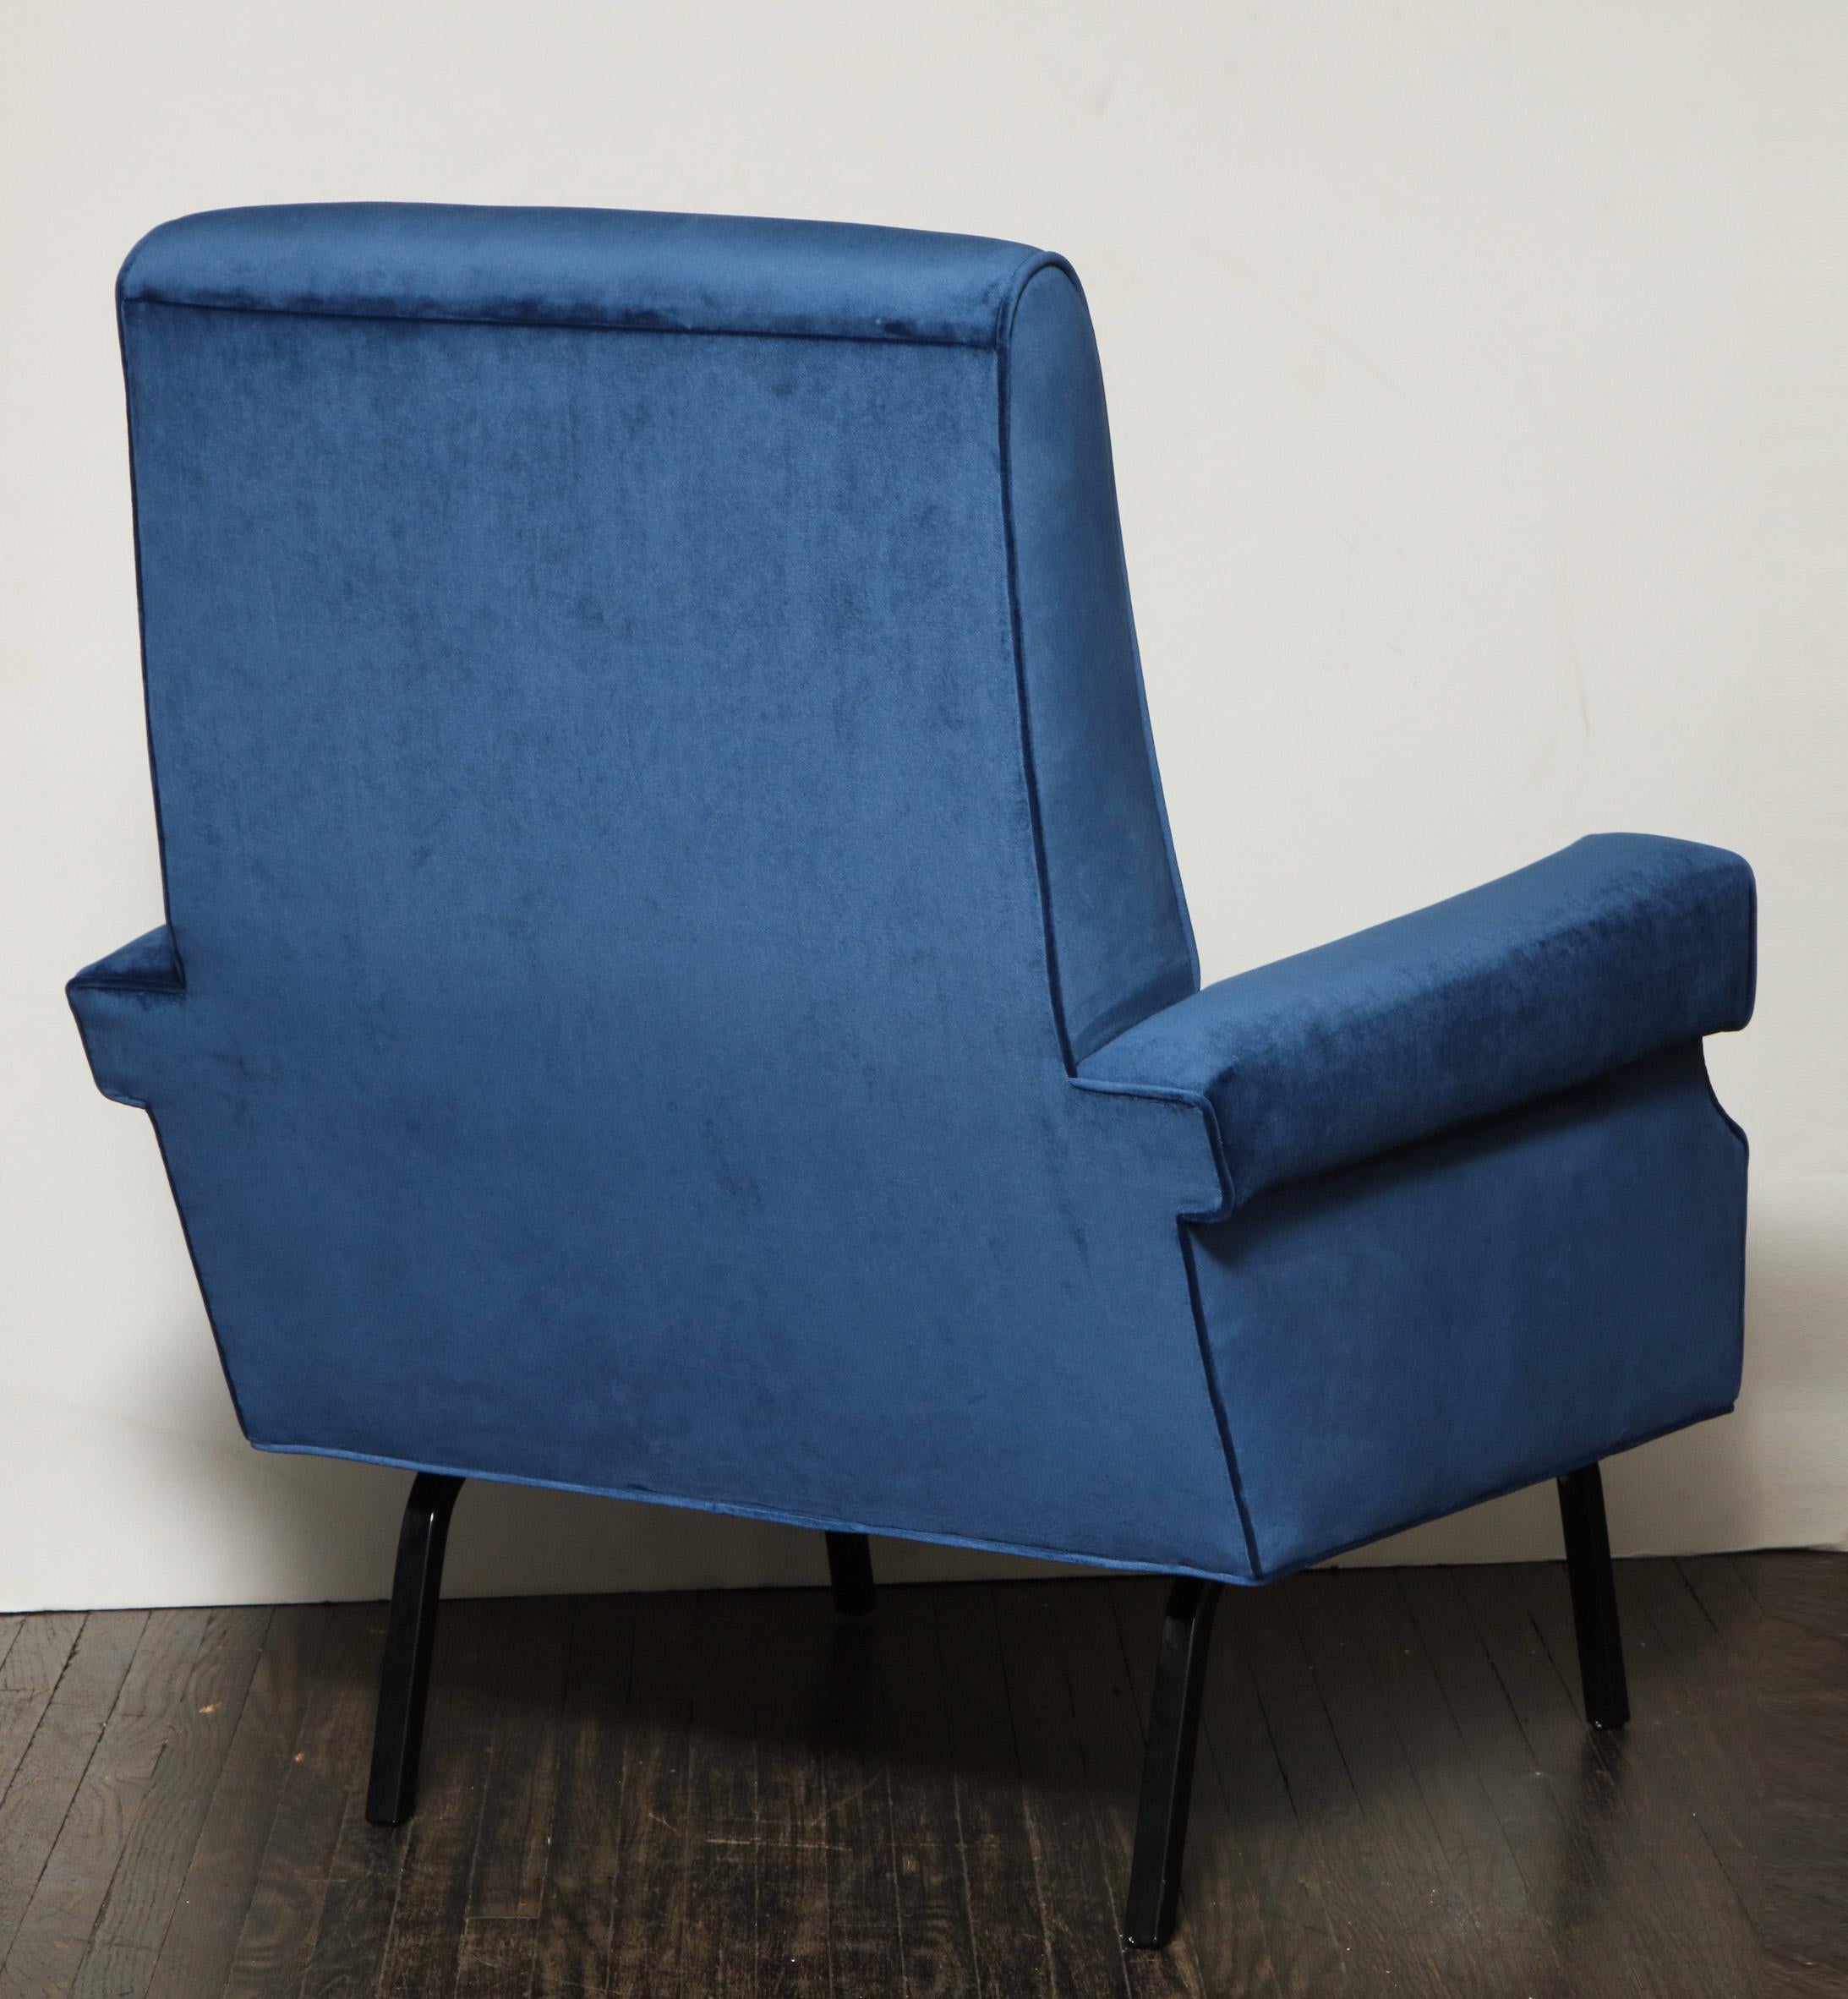 Pair of Mid-Century Modern Blue Velvet Chairs with Black Iron Legs 1